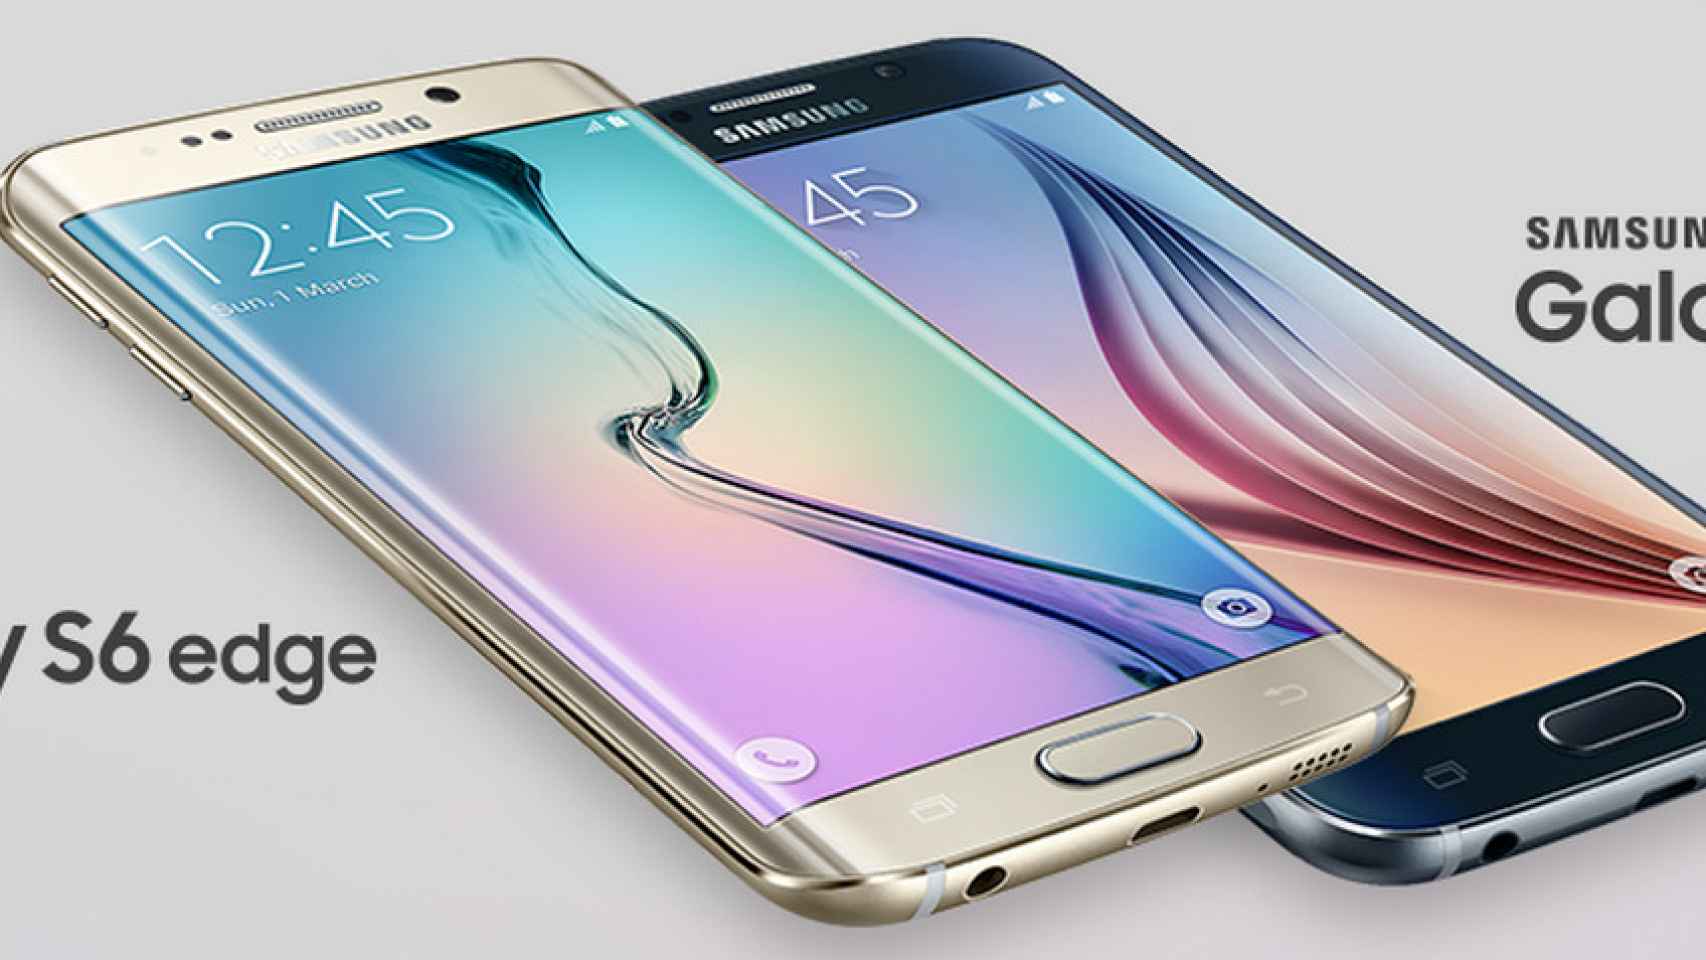 Comparativa técnica: Samsung Galaxy S6 y S6 Edge vs la gama alta Android